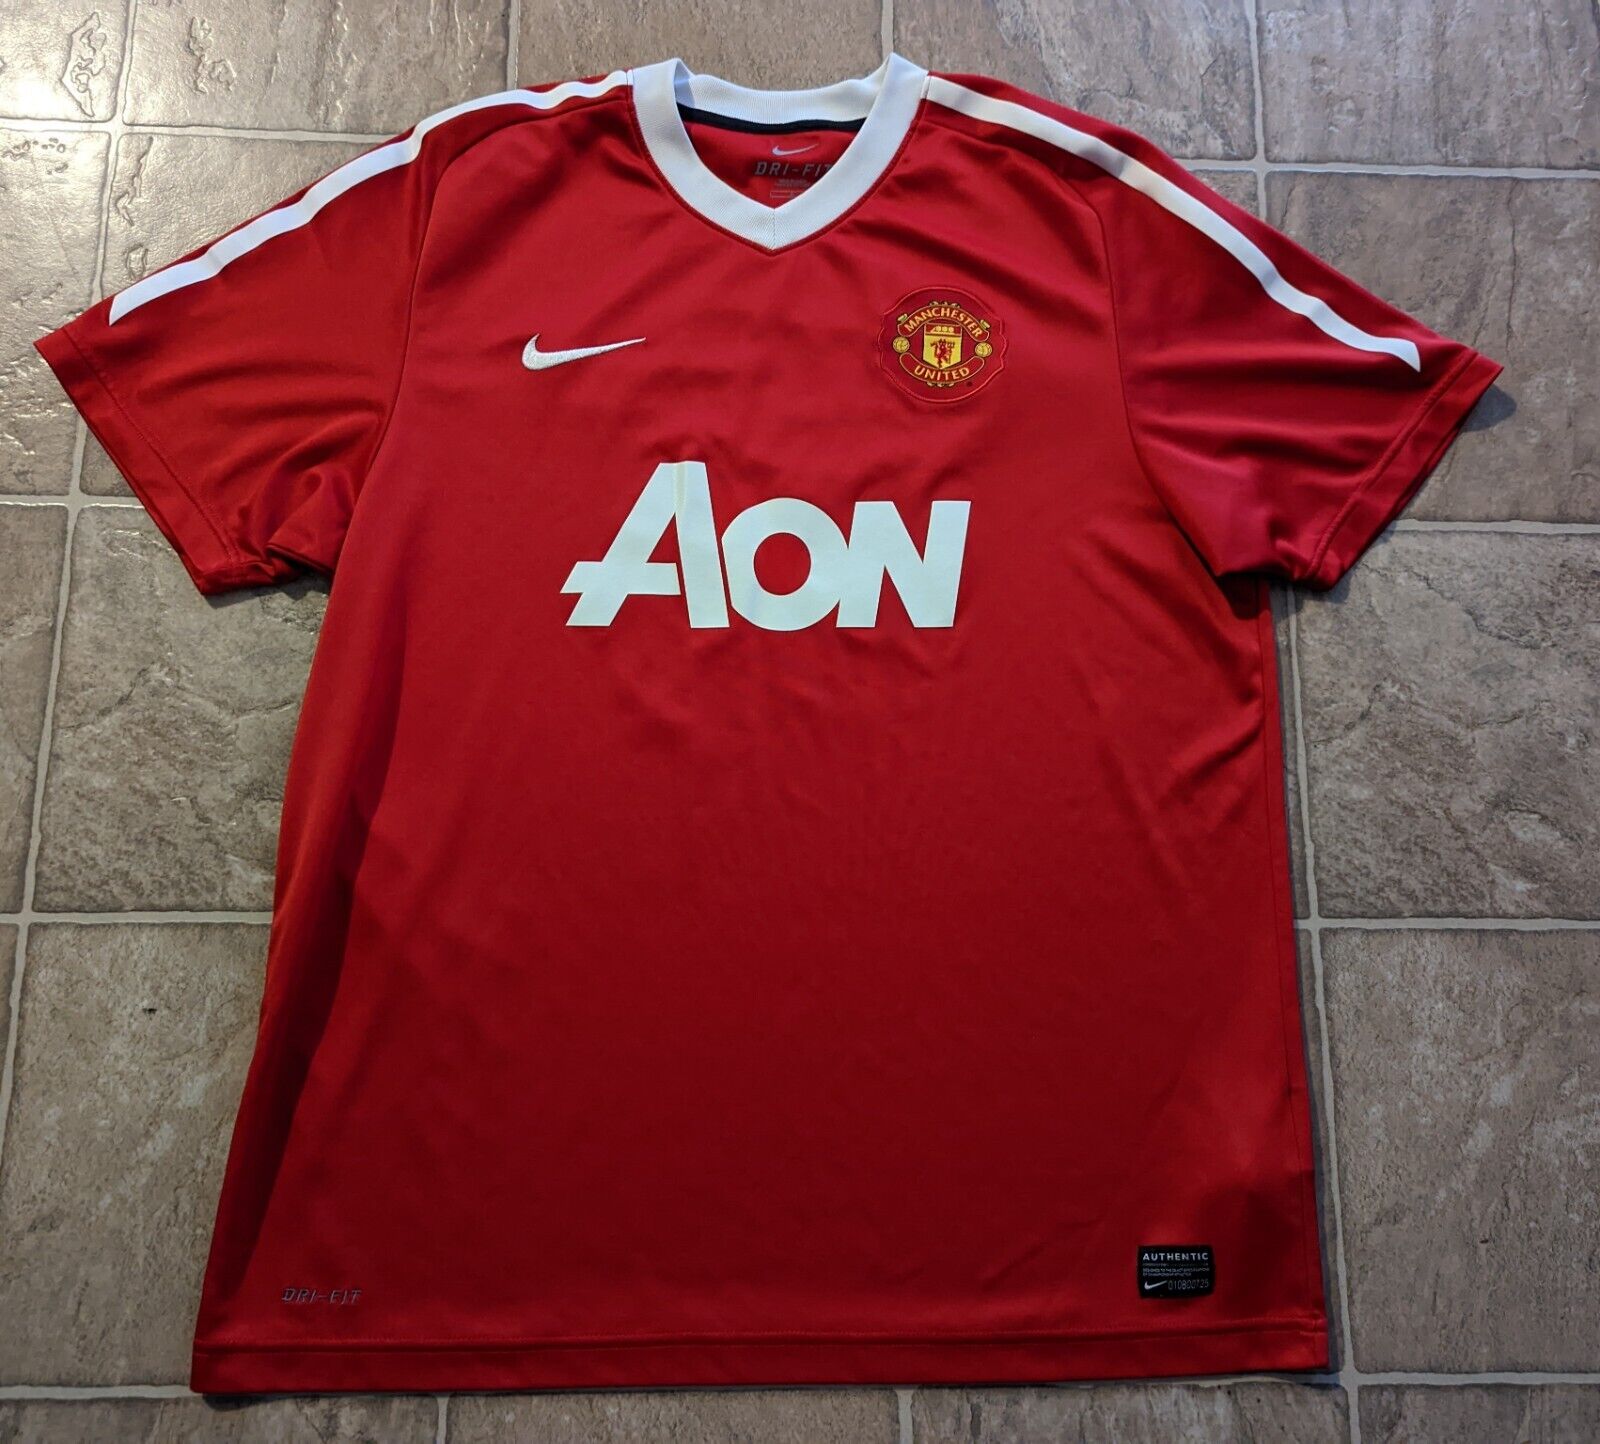 Nike men's sz L Manchester United AON Soccer Jersey red ss shirt Q1